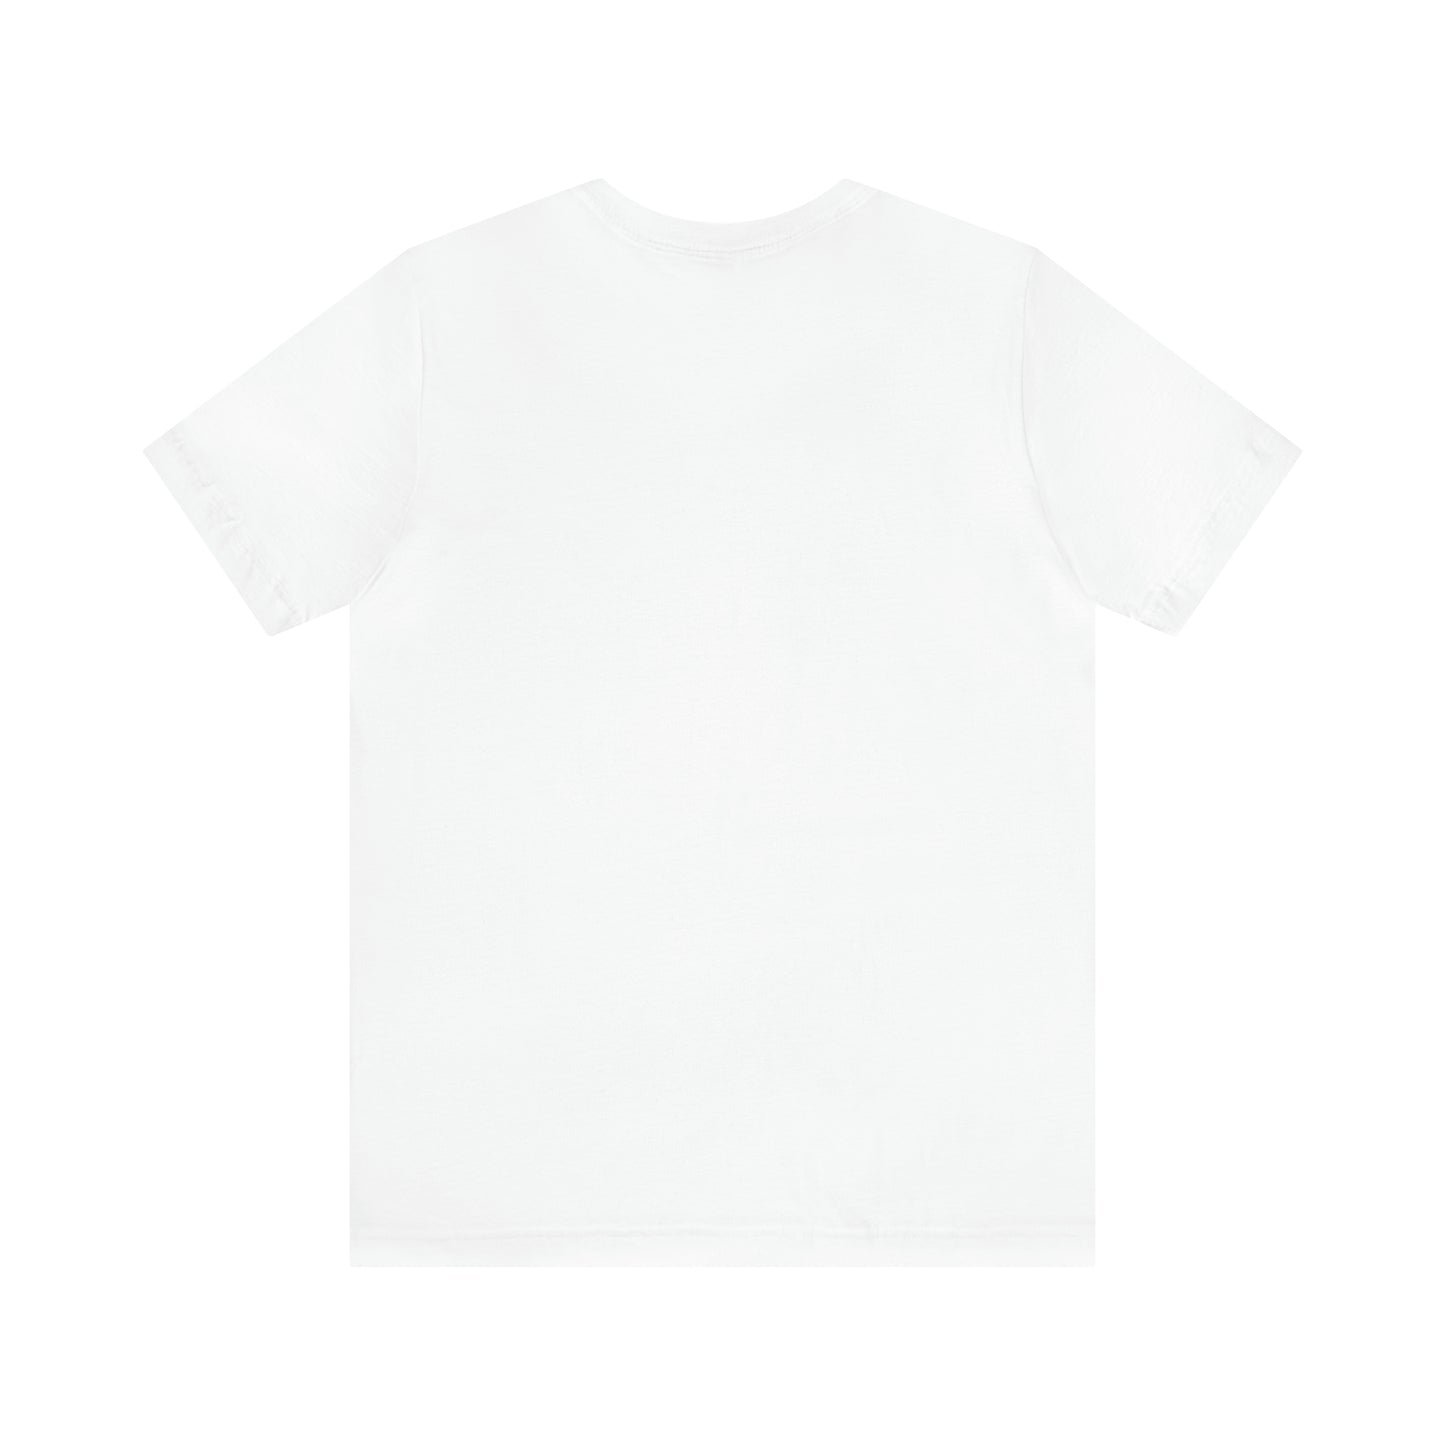 Happy Easter T-Shirt | Easter Tee T-Shirt Petrova Designs